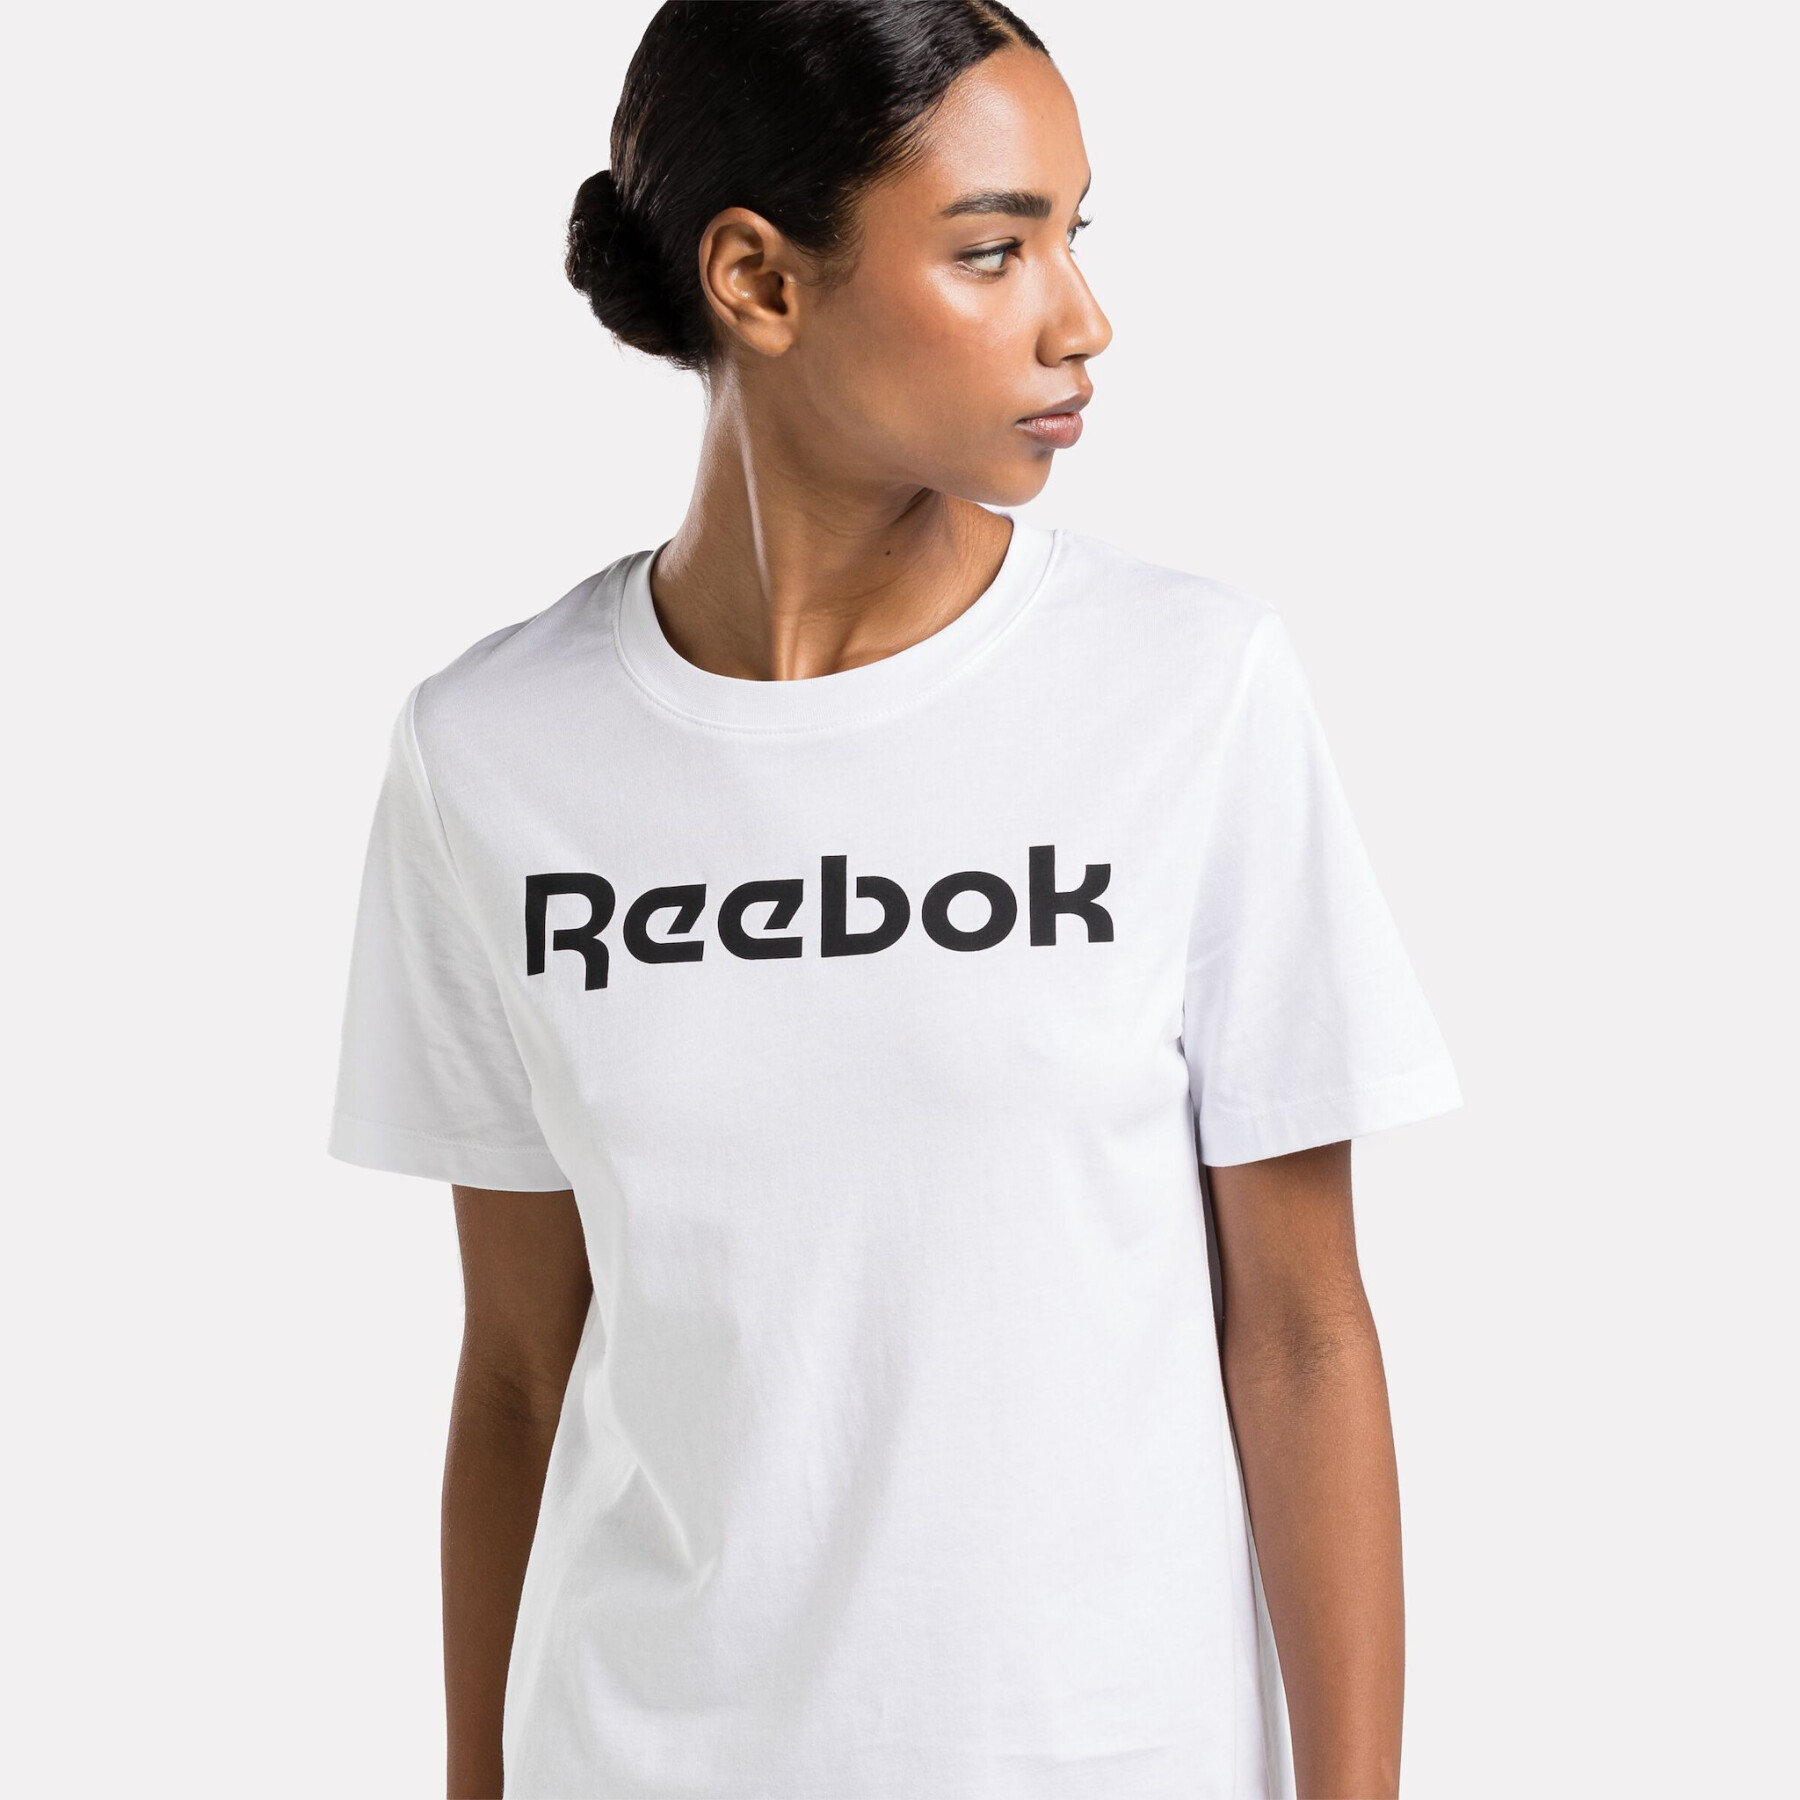 T-shirt da donna Reebok Read Graphic